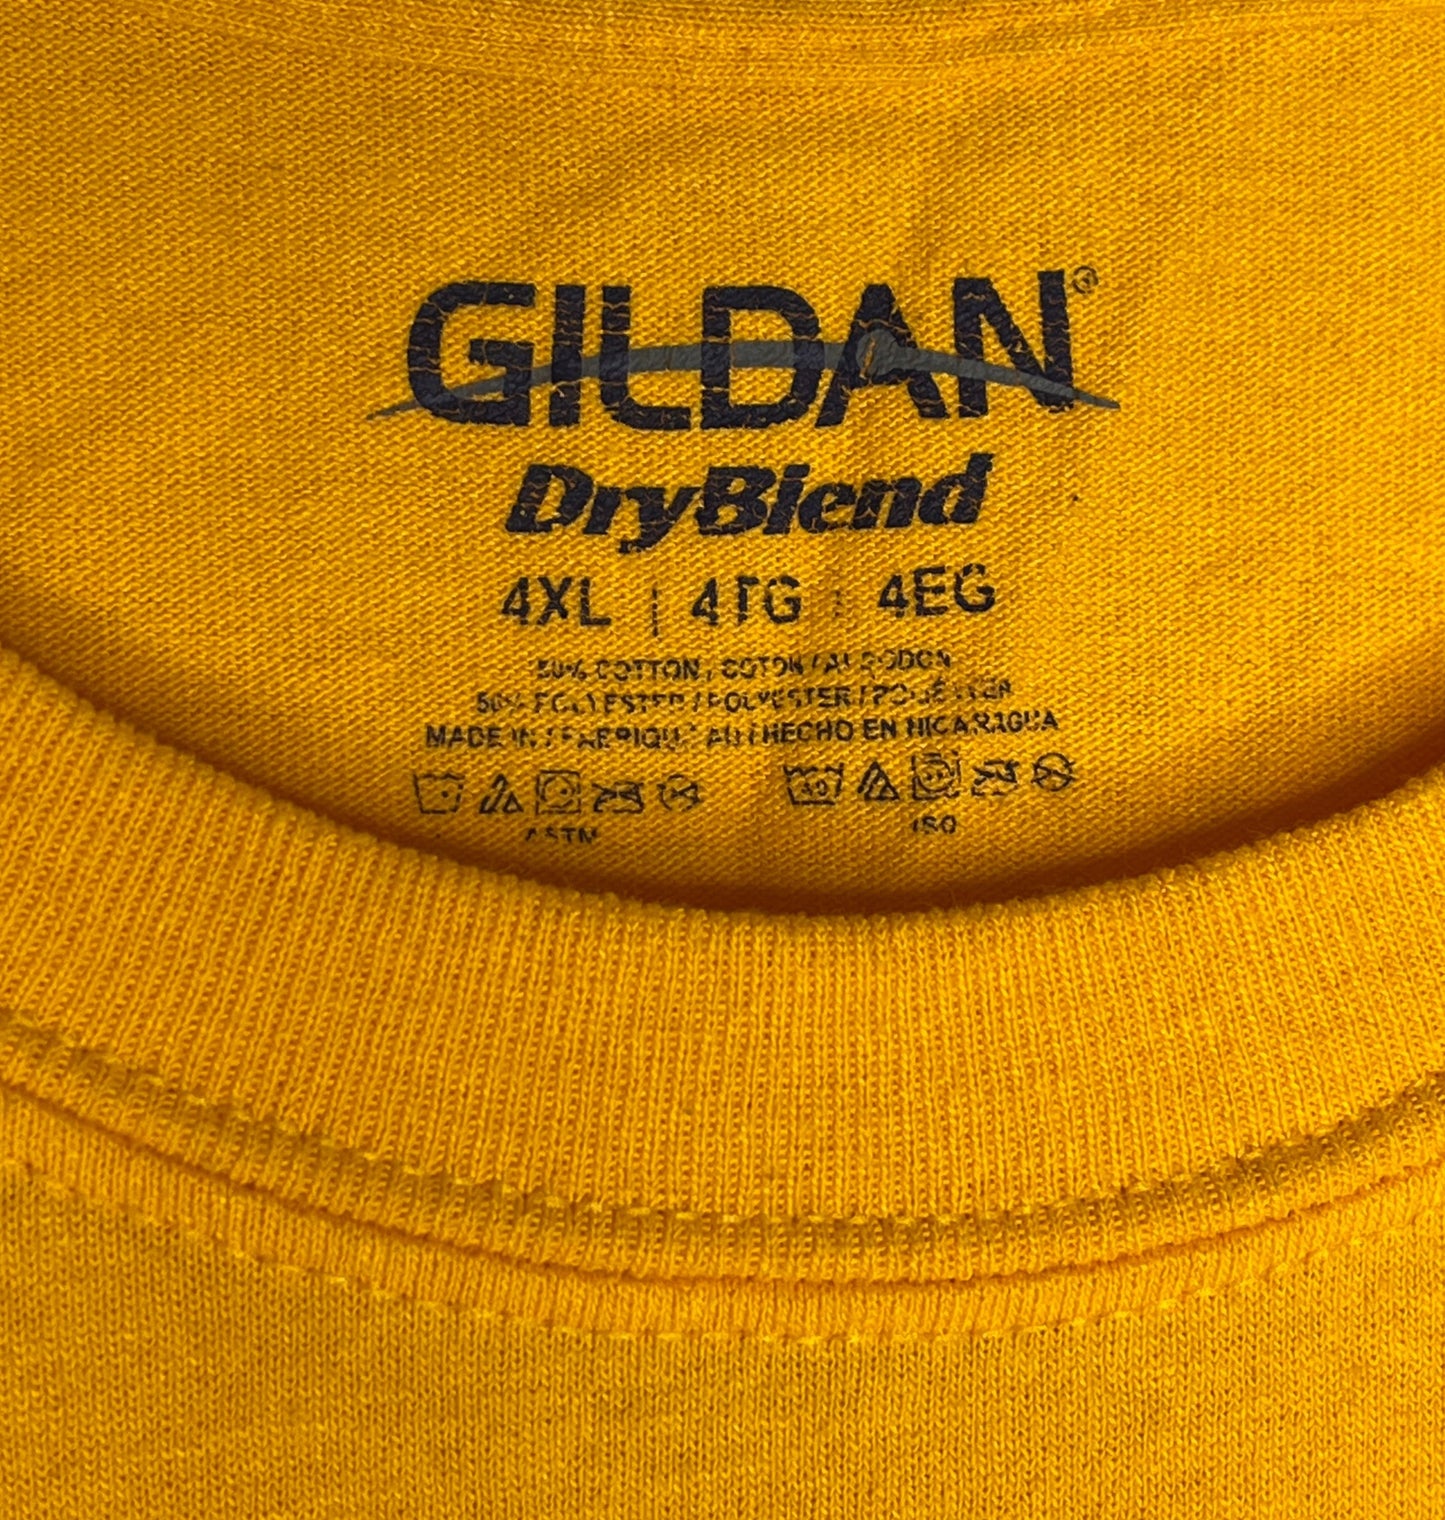 Gildan MEN'S T-Shirt Yellow, Red Size 4XL SKU 000447